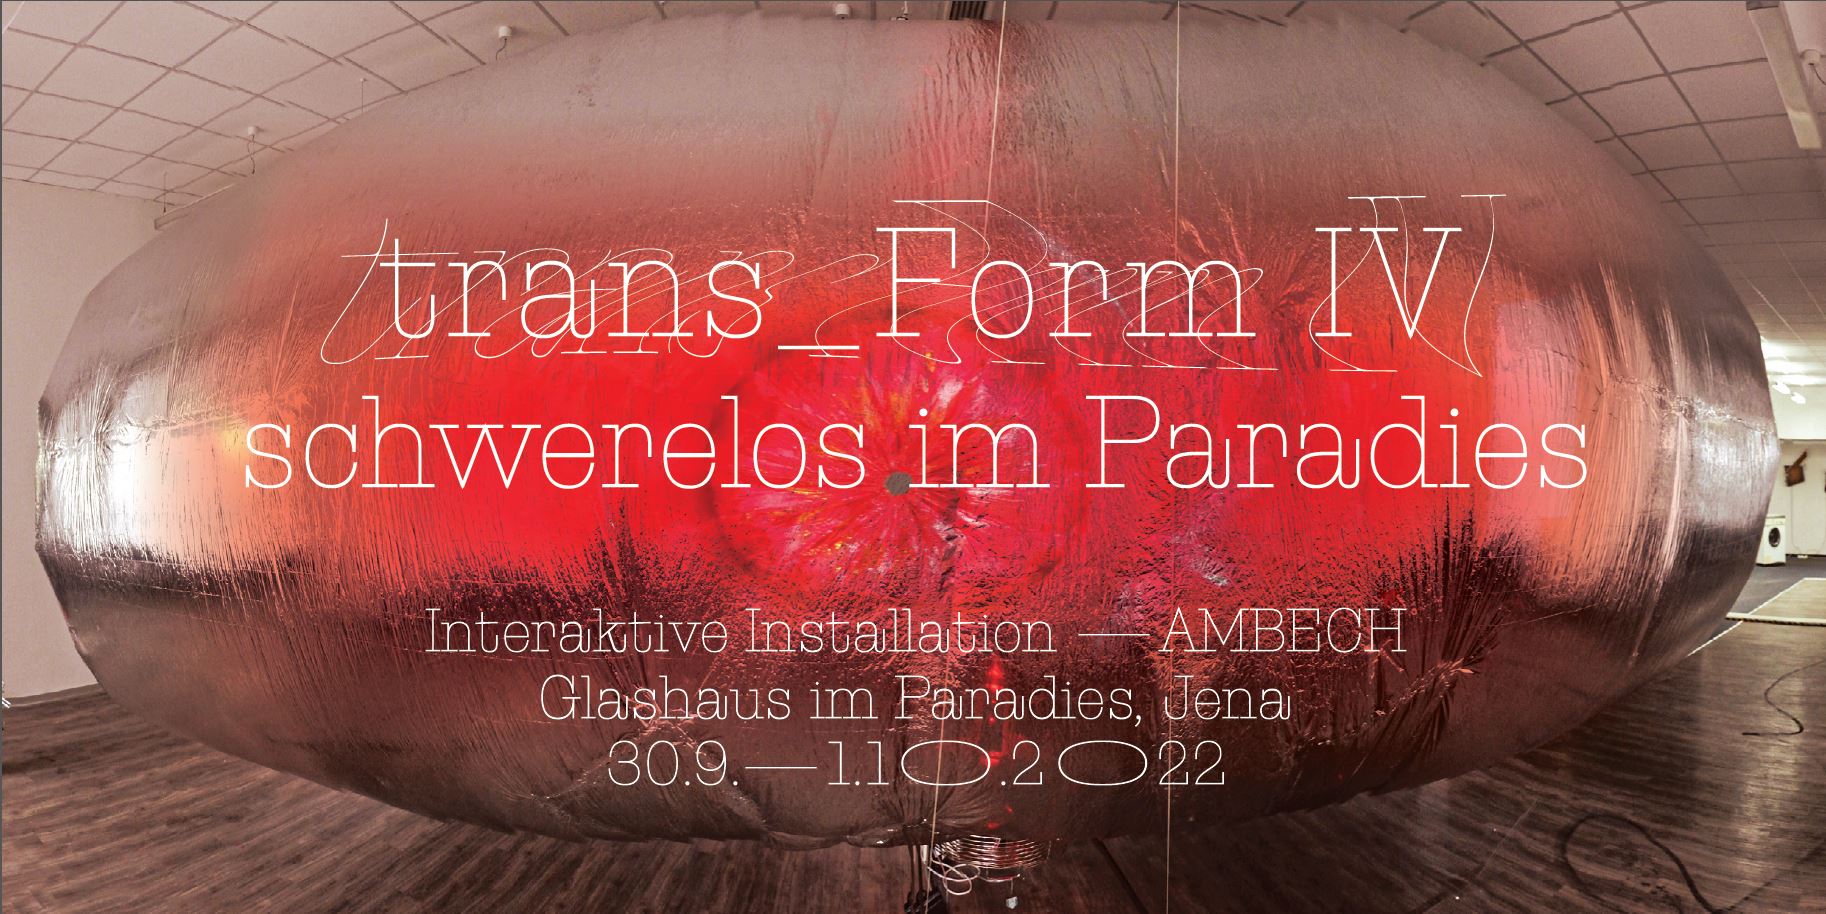 trans_Form_IV | schwerelosim Paradies | Glashaus im Paradies Jena 1